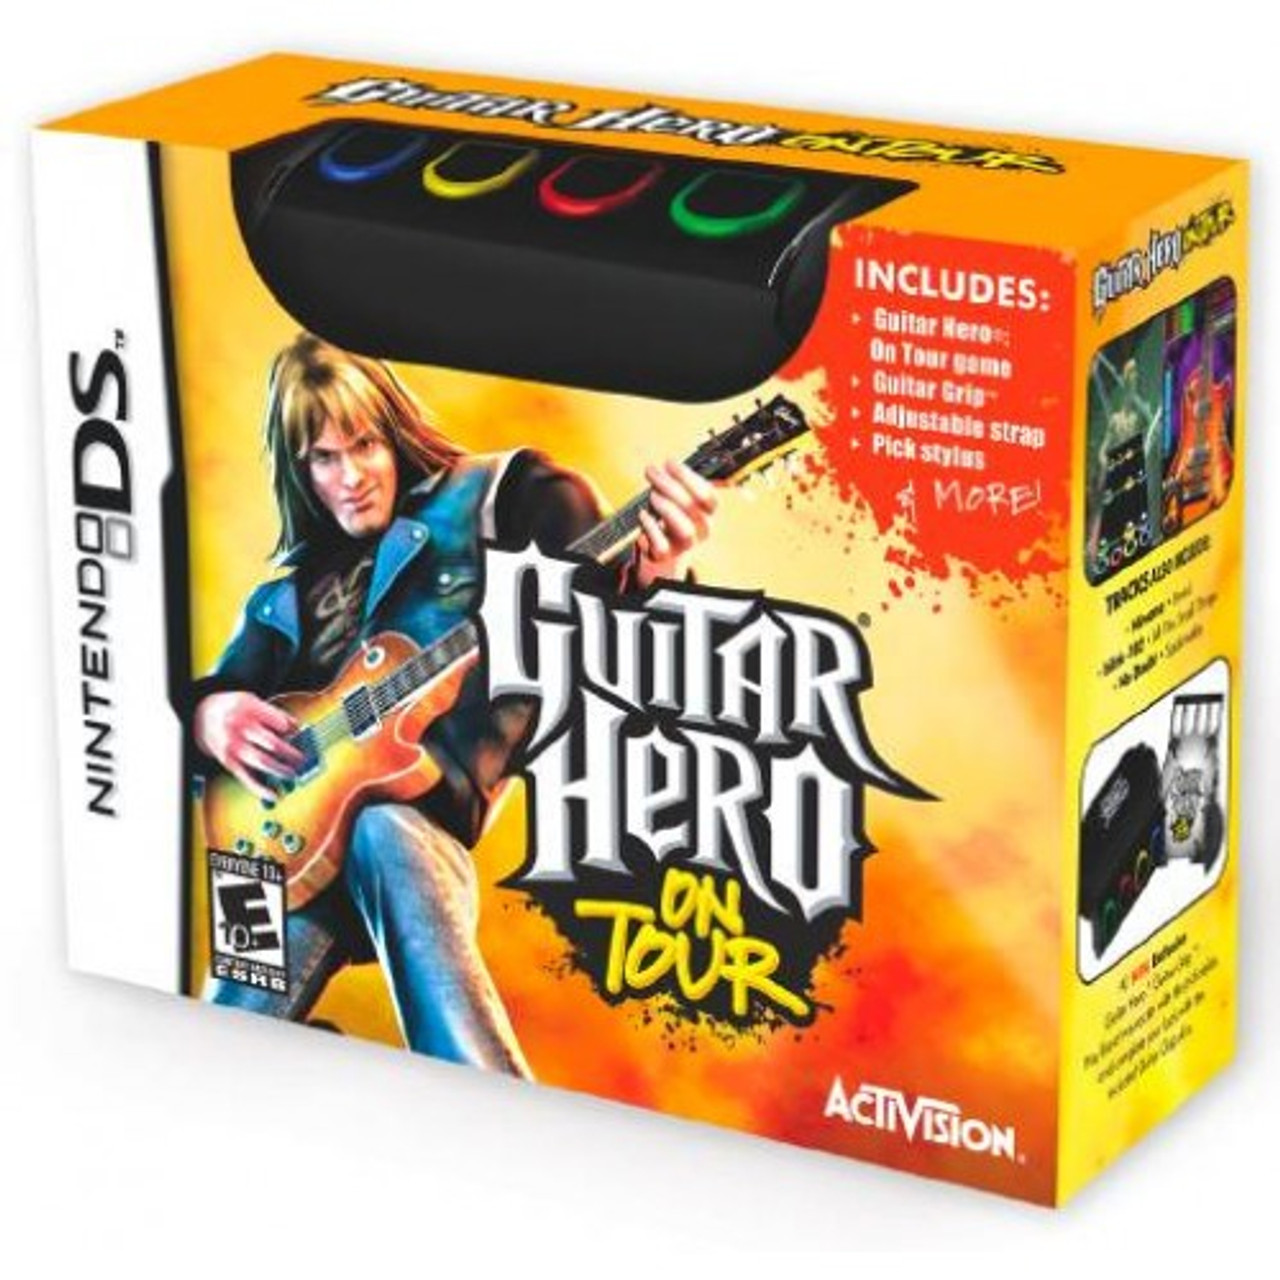 Nintendo DS Lite Guitar Hero: On Tour Special Edition Bundle New